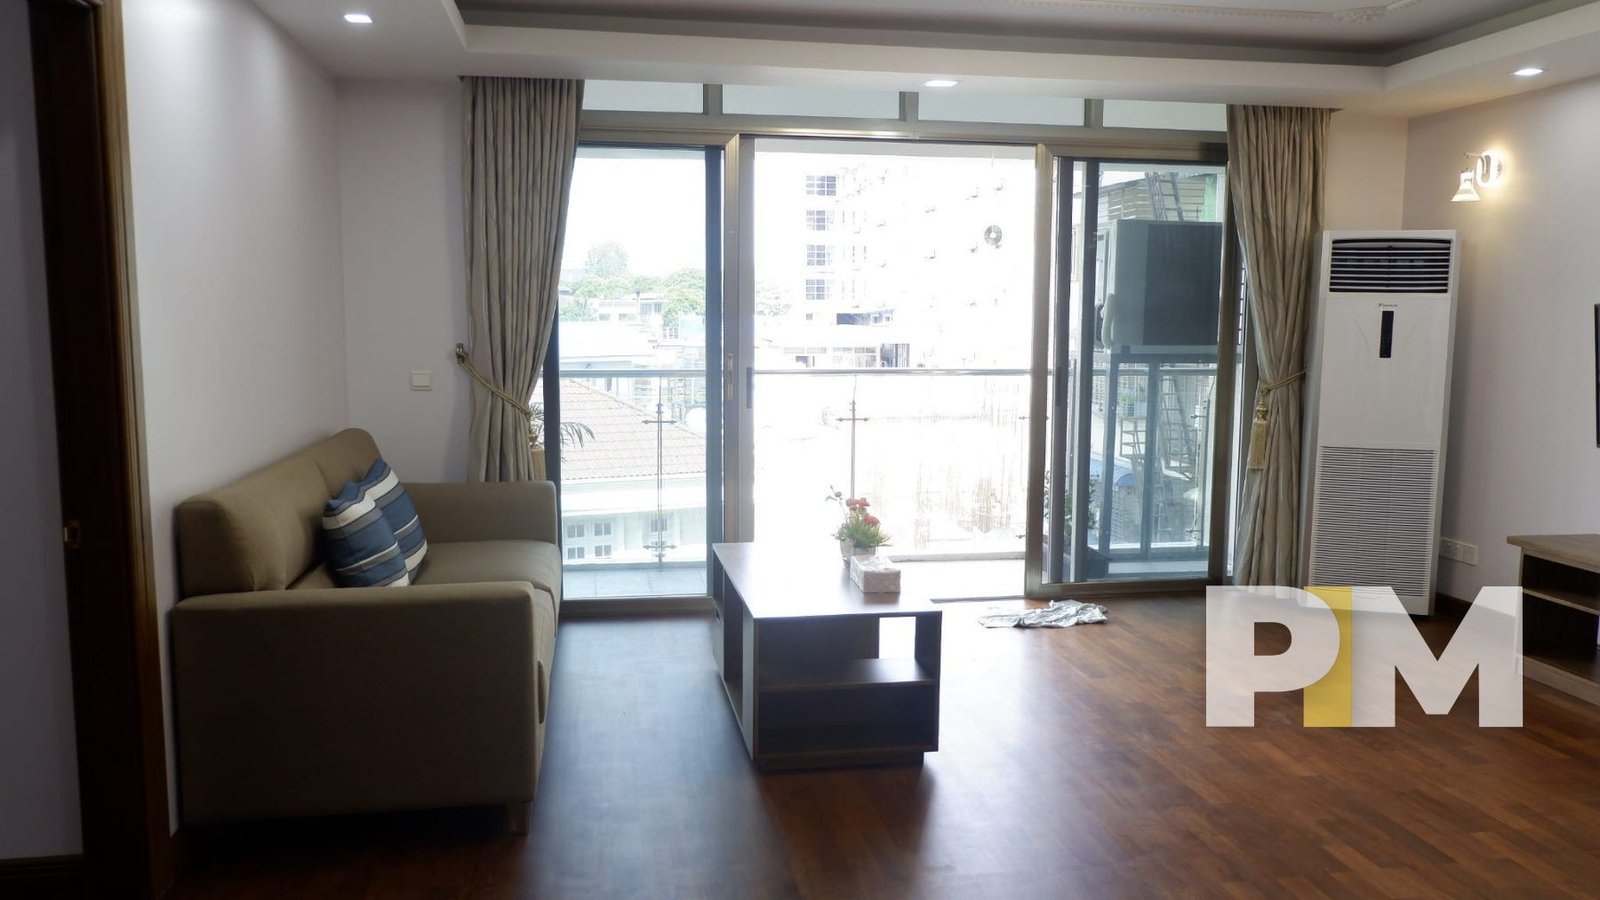 living room - property in yangon